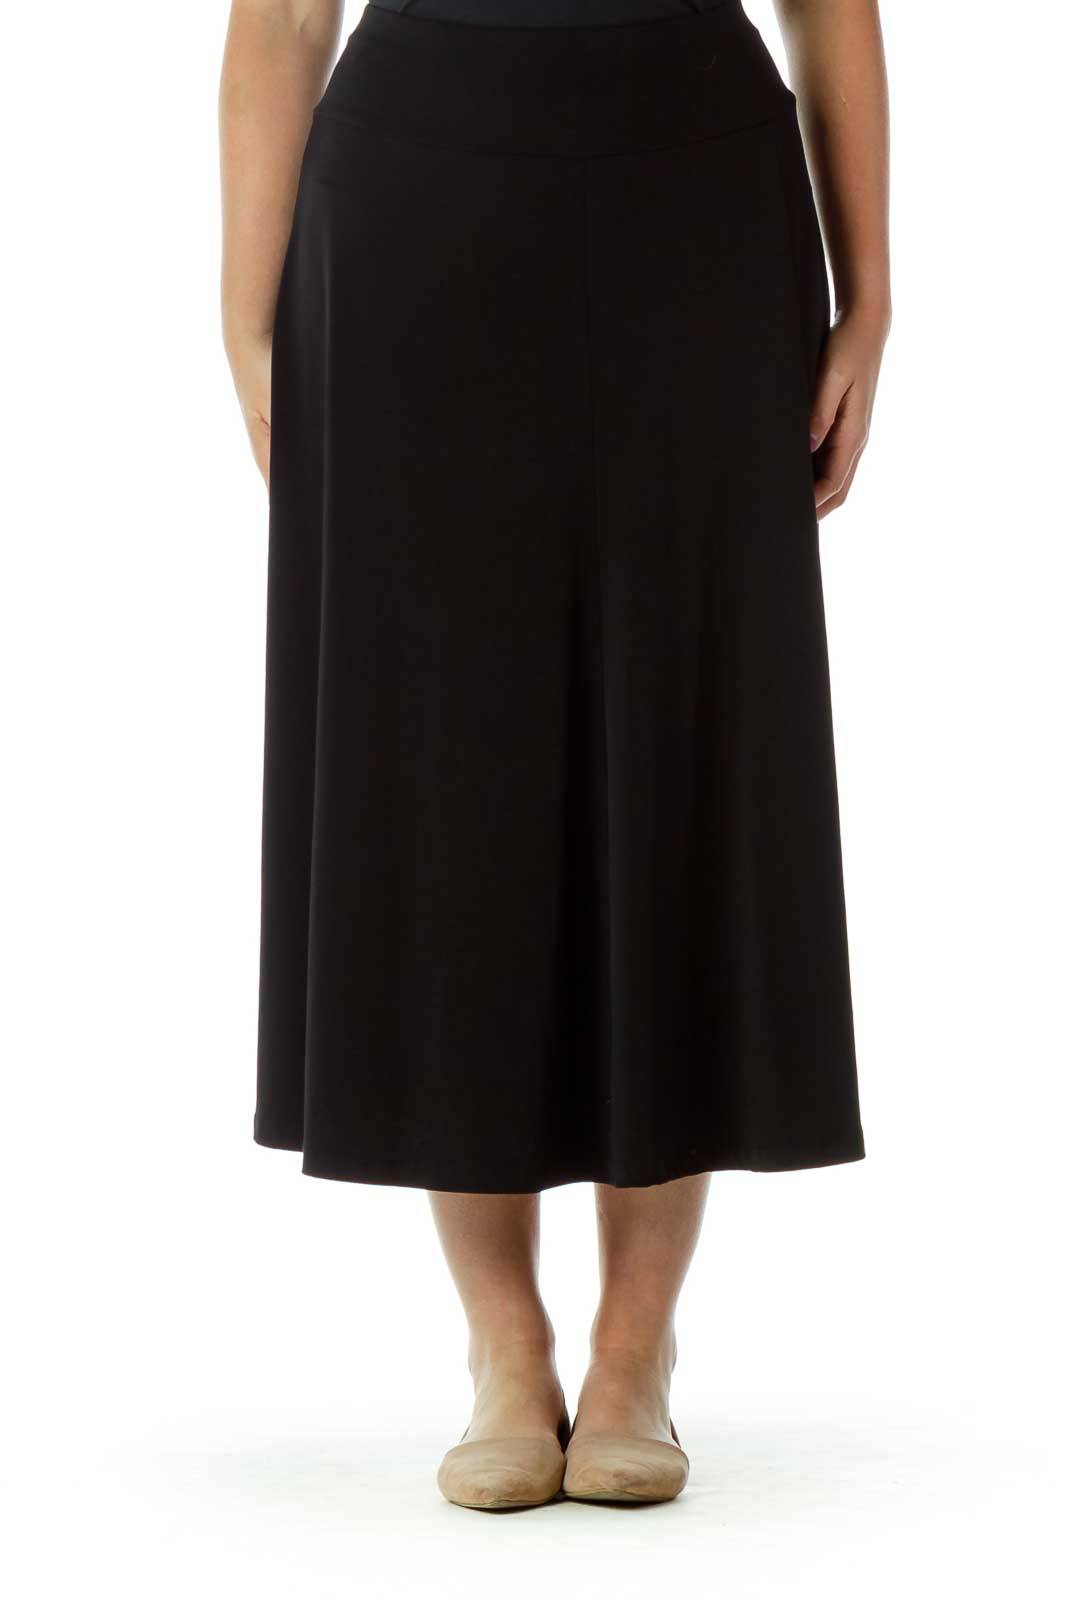 Black A-Line Midi Skirt Front